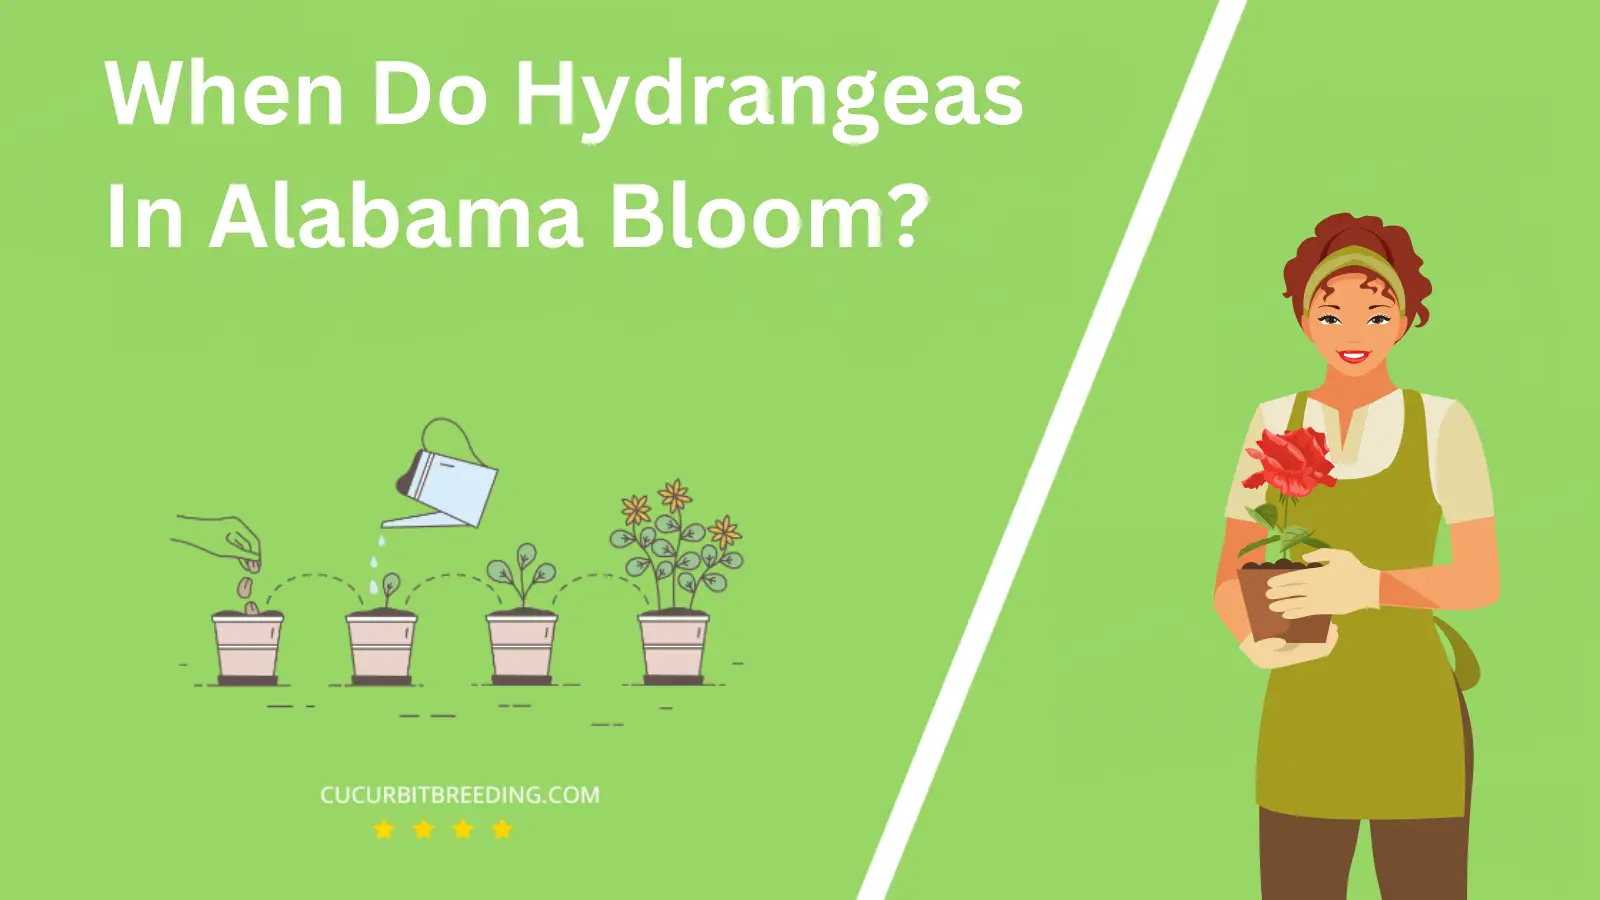 When Do Hydrangeas In Alabama Bloom?